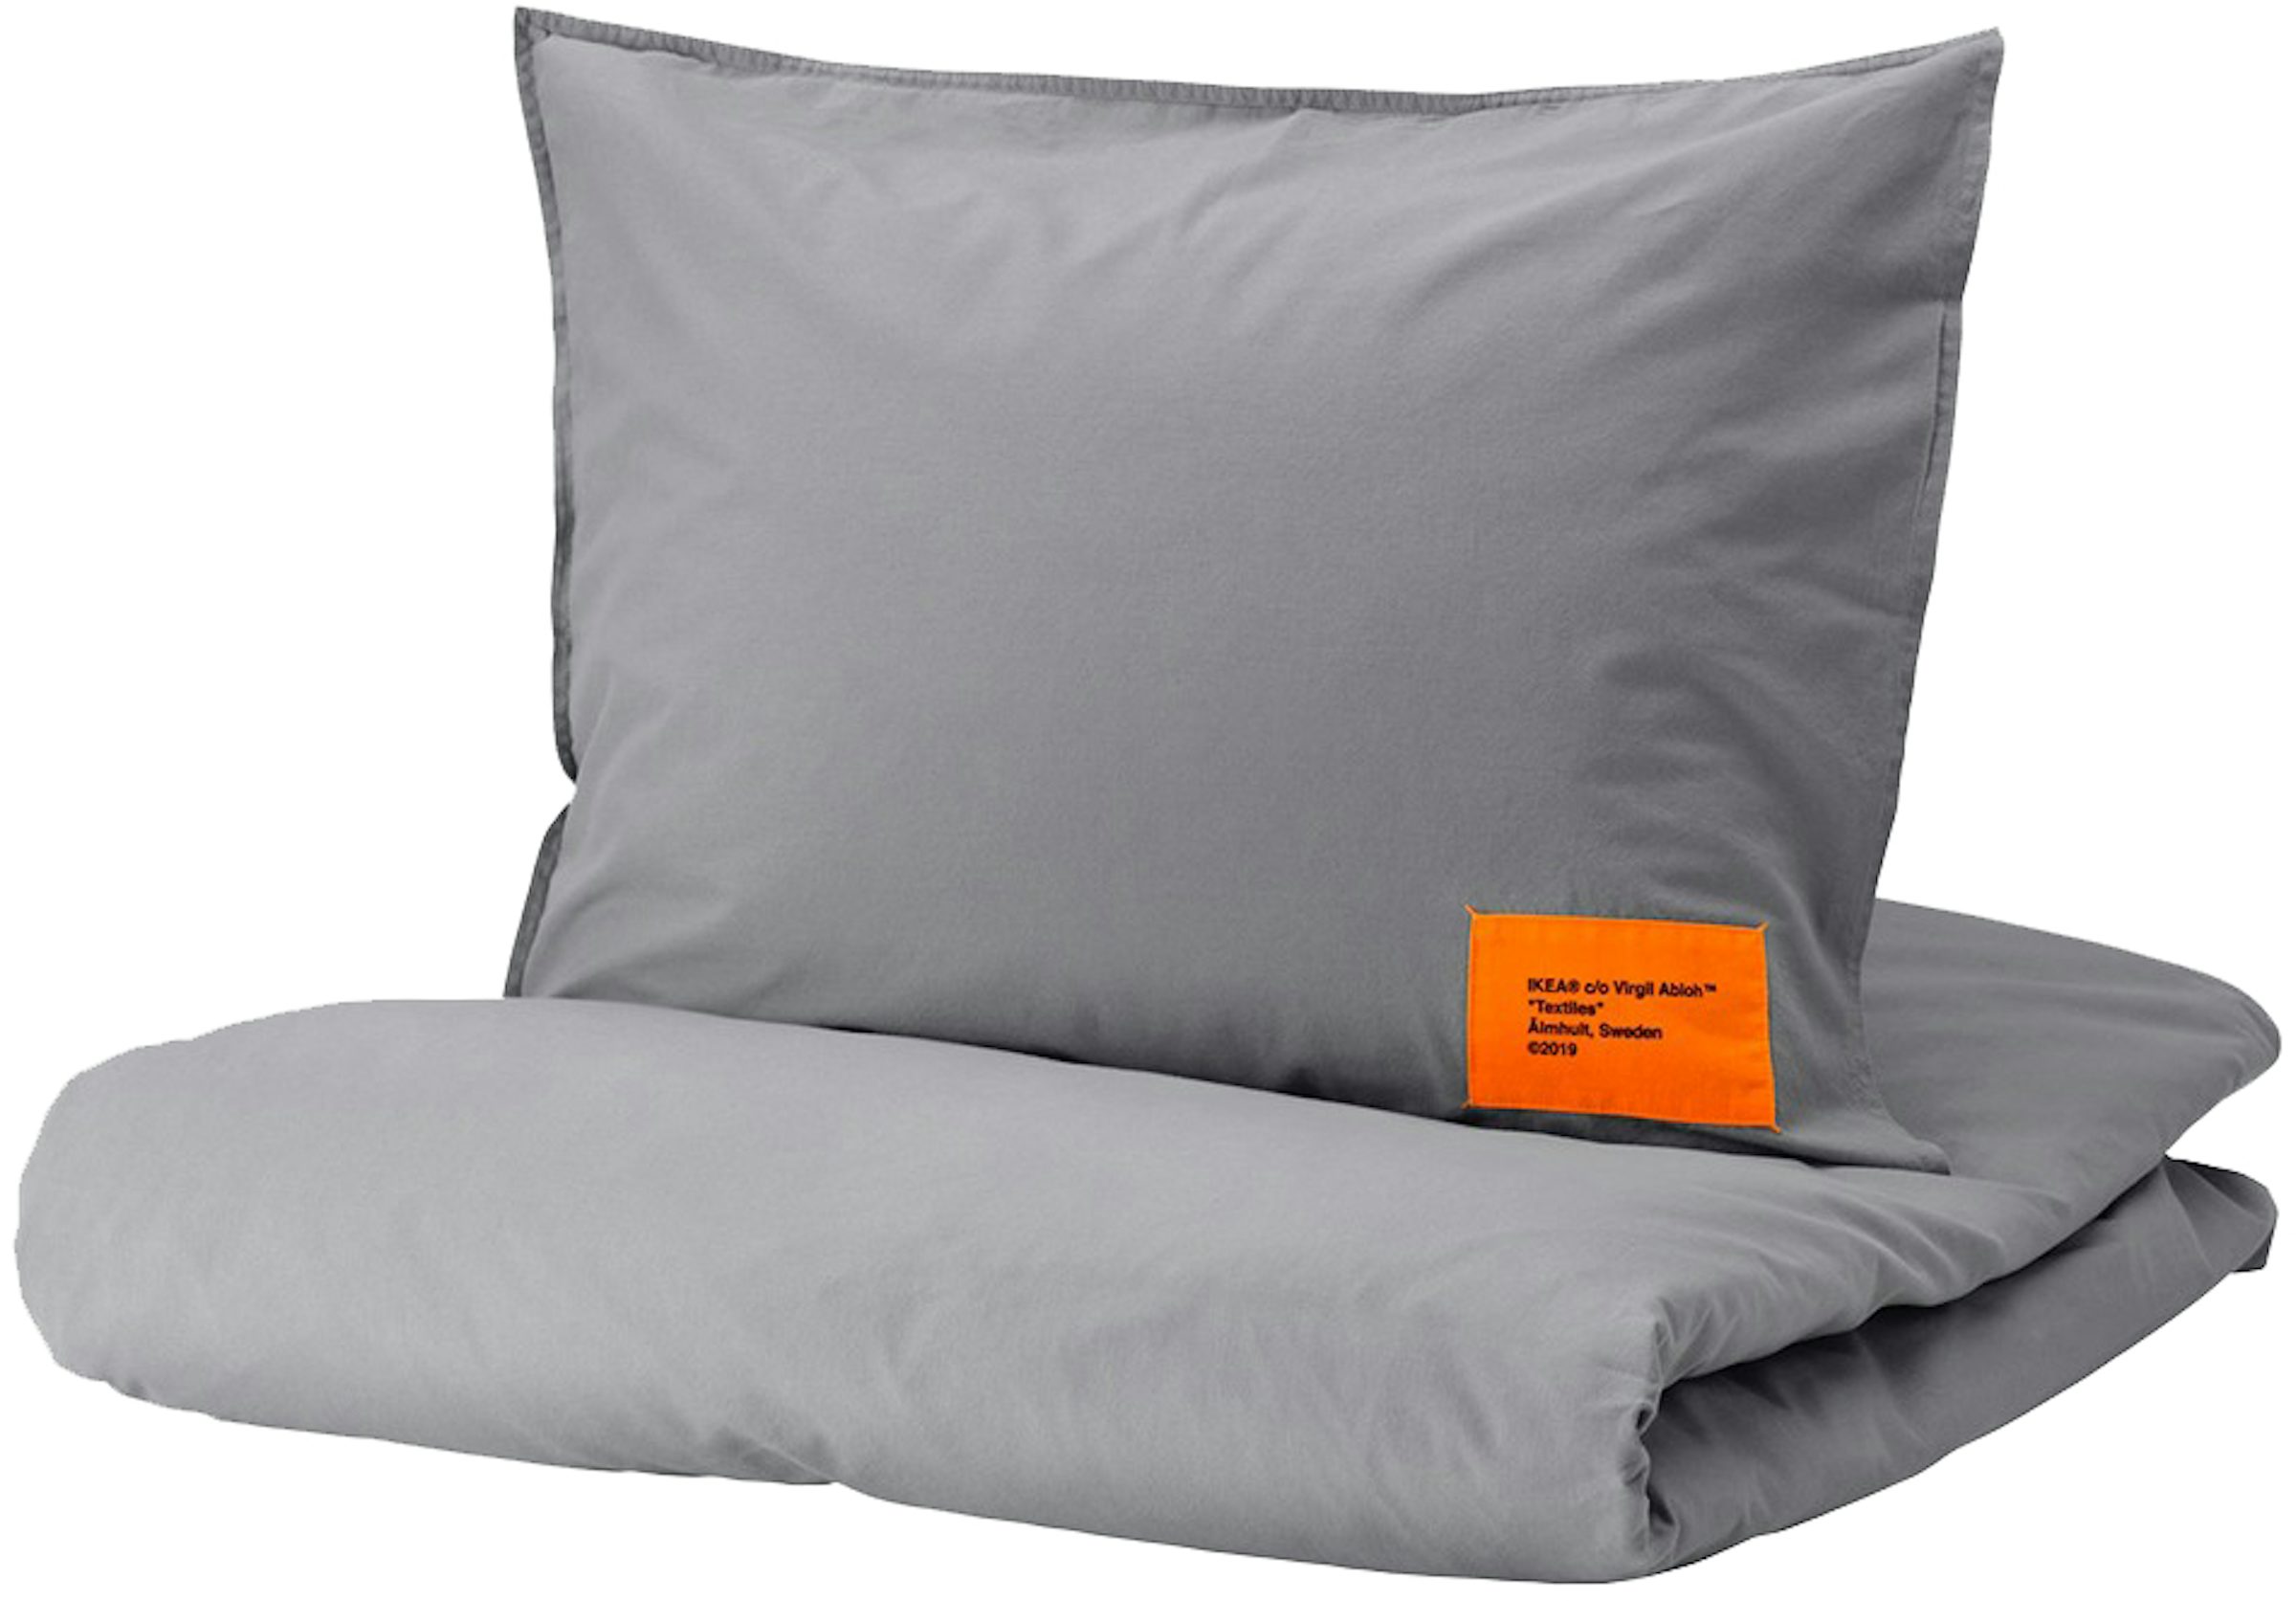 Virgil Abloh x IKEA MARKERAD US Duvet Cover and 2 Pillowcases